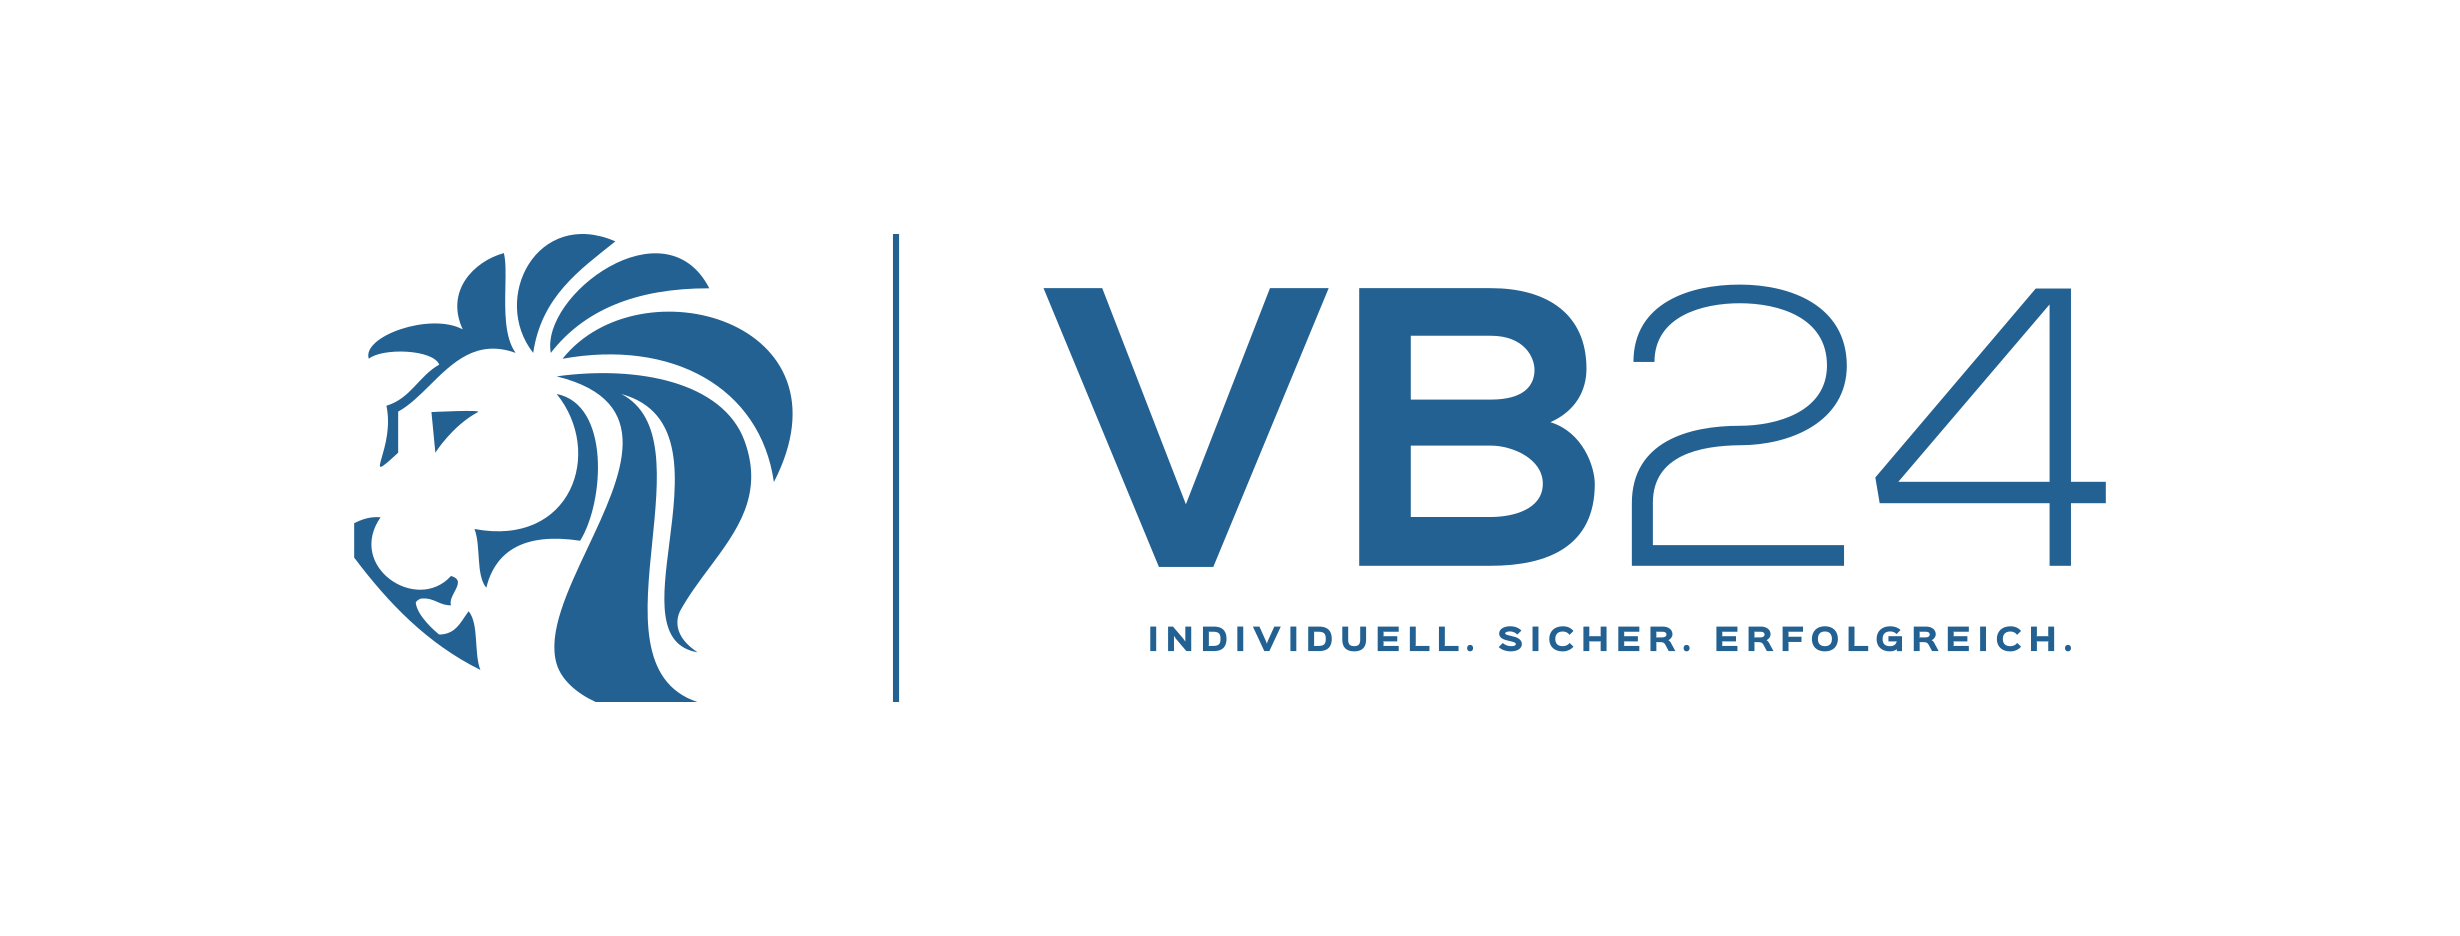 Vorsorge-Beratung 24 Logo